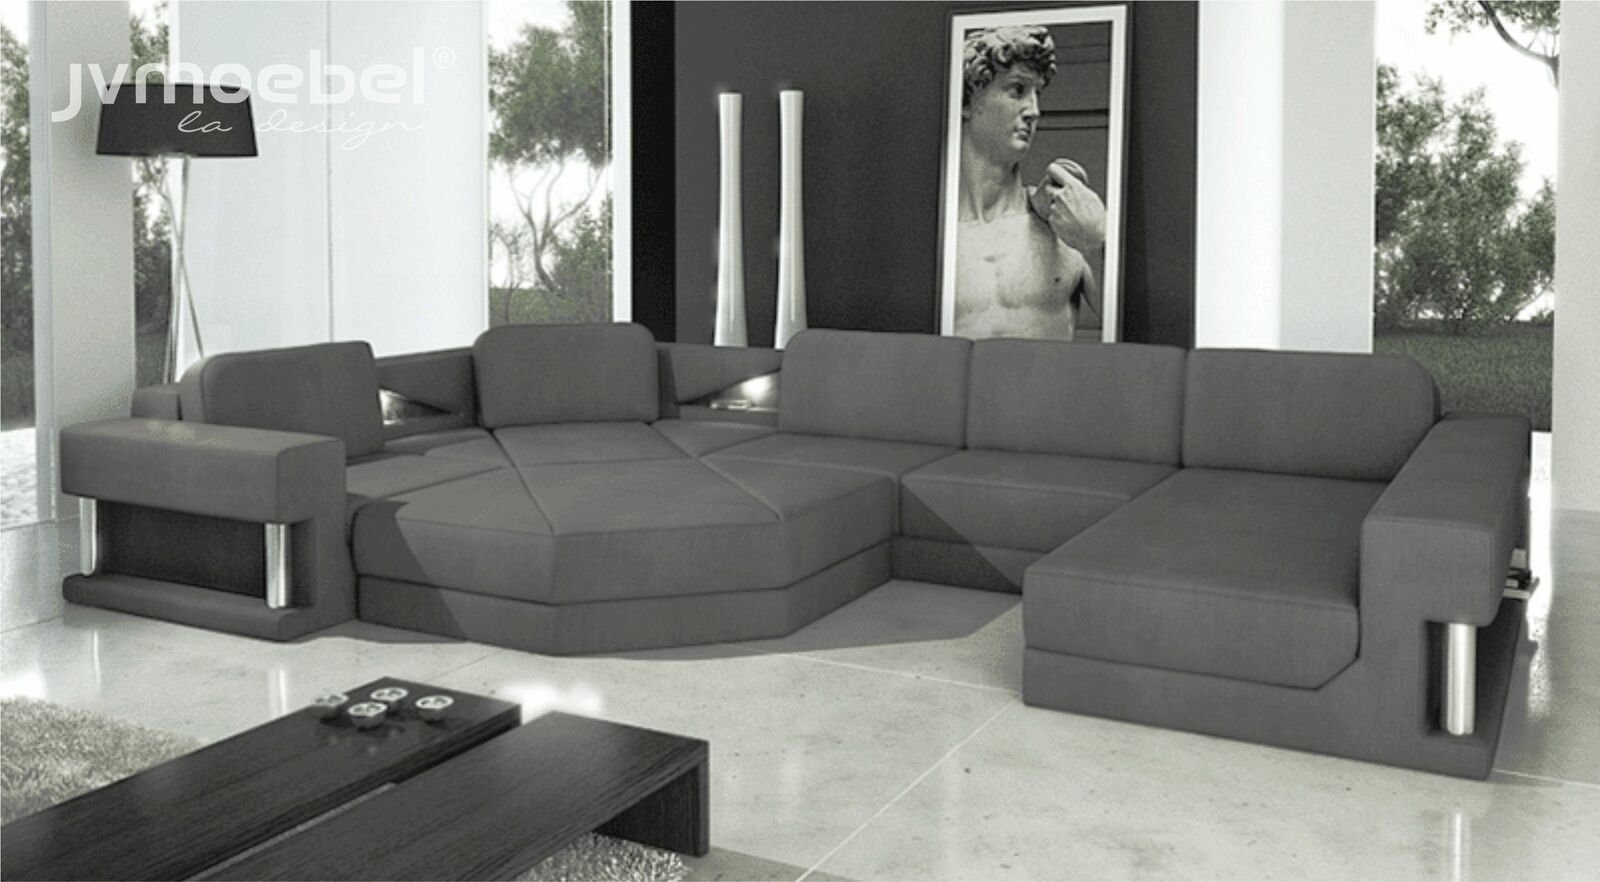 U-Form JVmoebel Modern Ecksofa, Couch Design Bettfunktion Schlaf Textil Polster Ecksofa